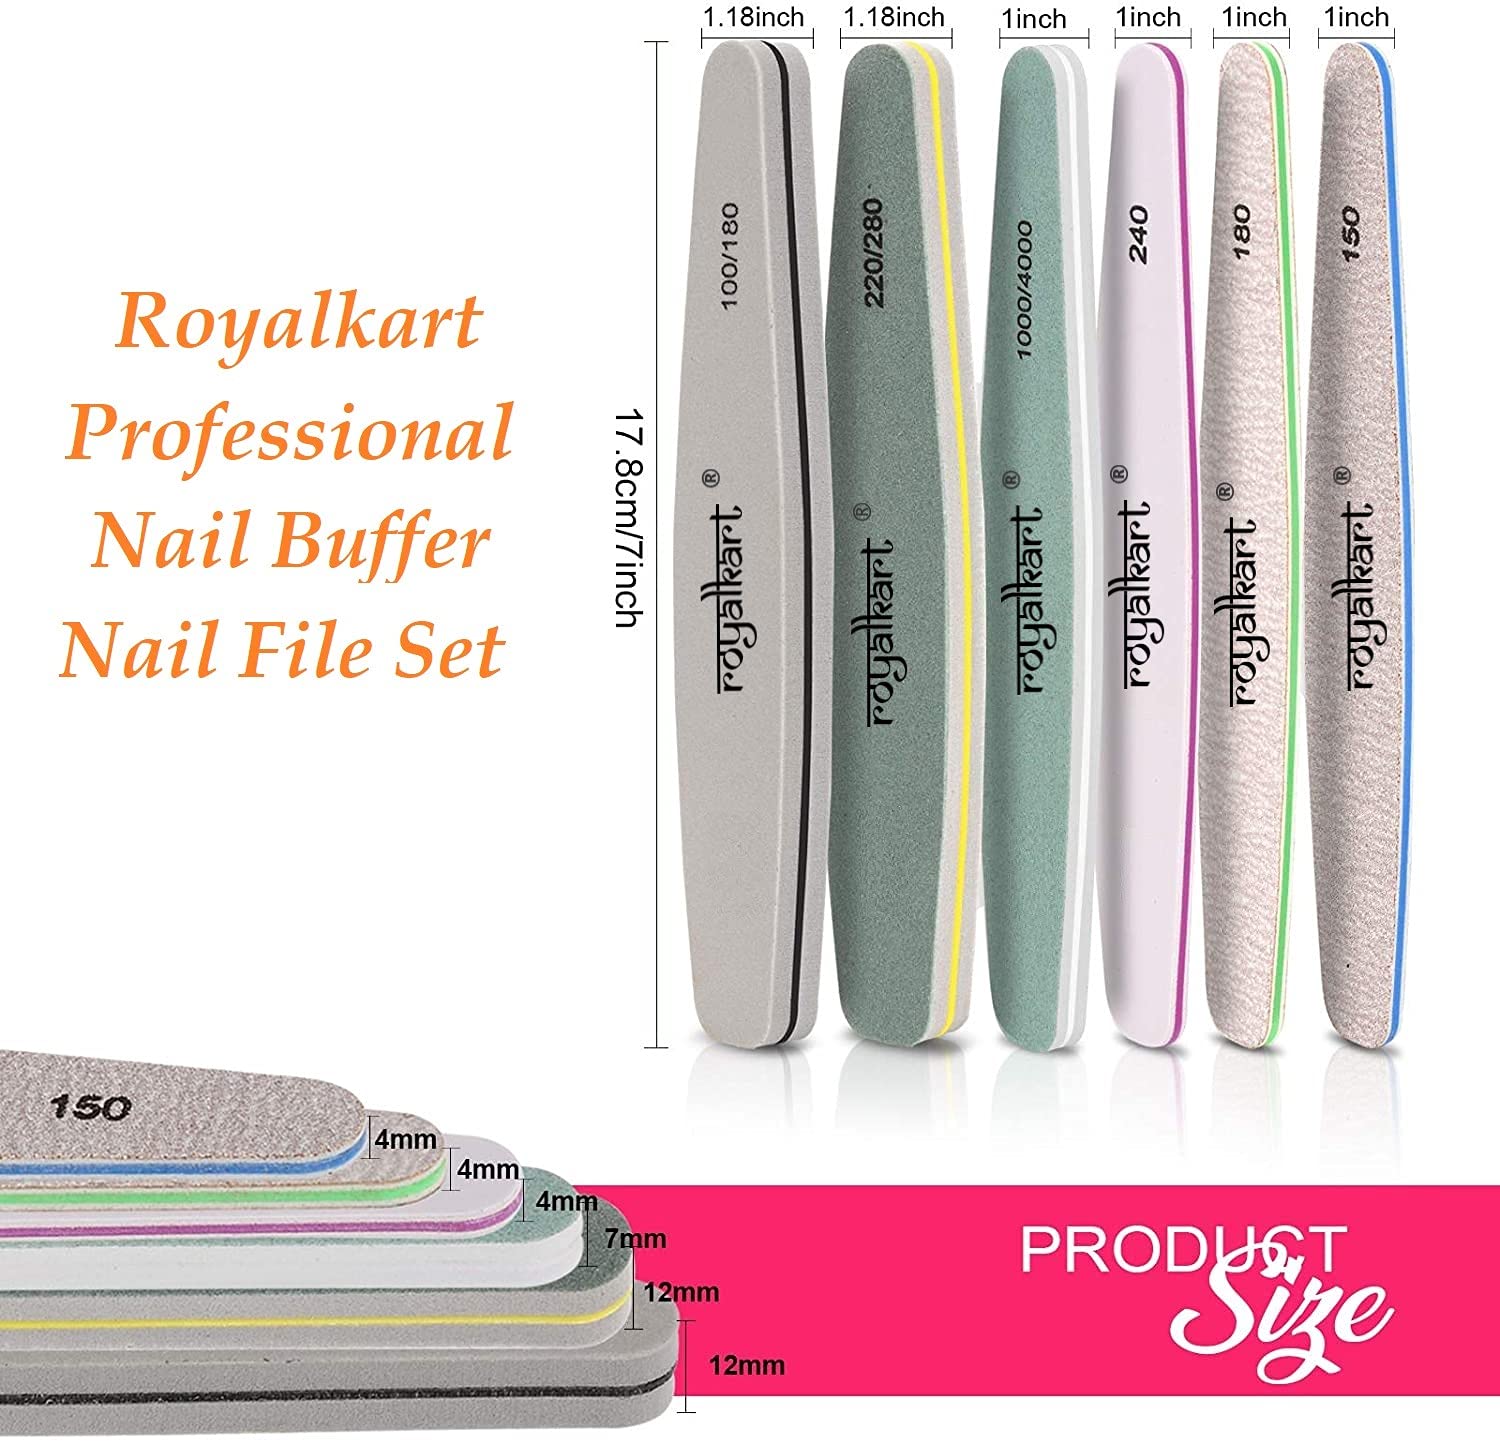 Professional Nail Filer Kit (Set of 6) Nail files & Buffers- Royalkart - The Urban Store